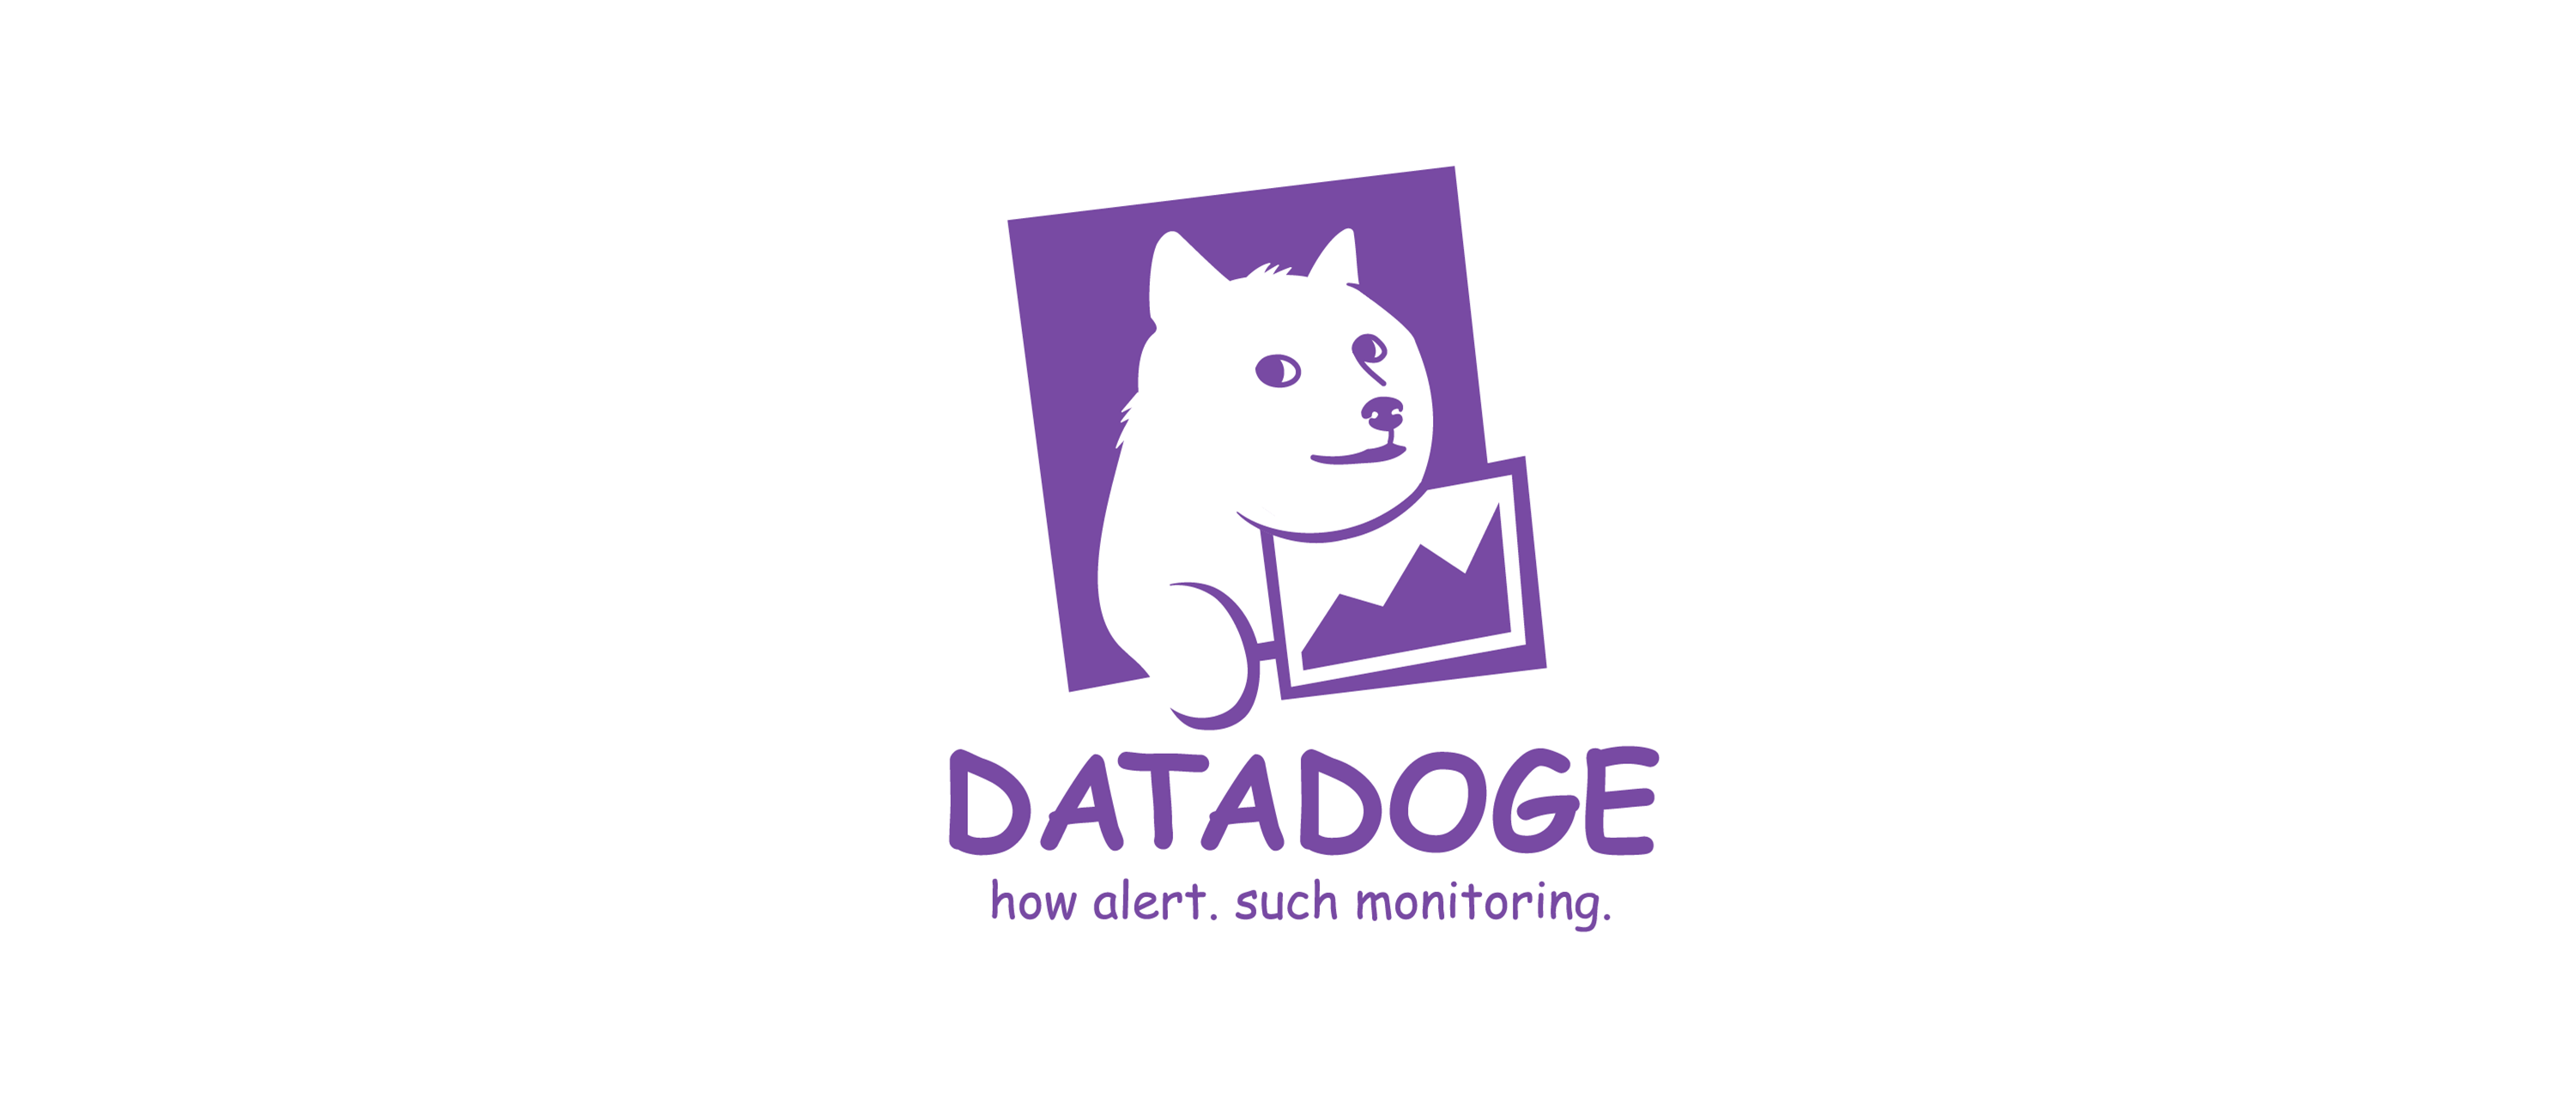 Datadog Logo - Datadog is now Datadoge | Datadog